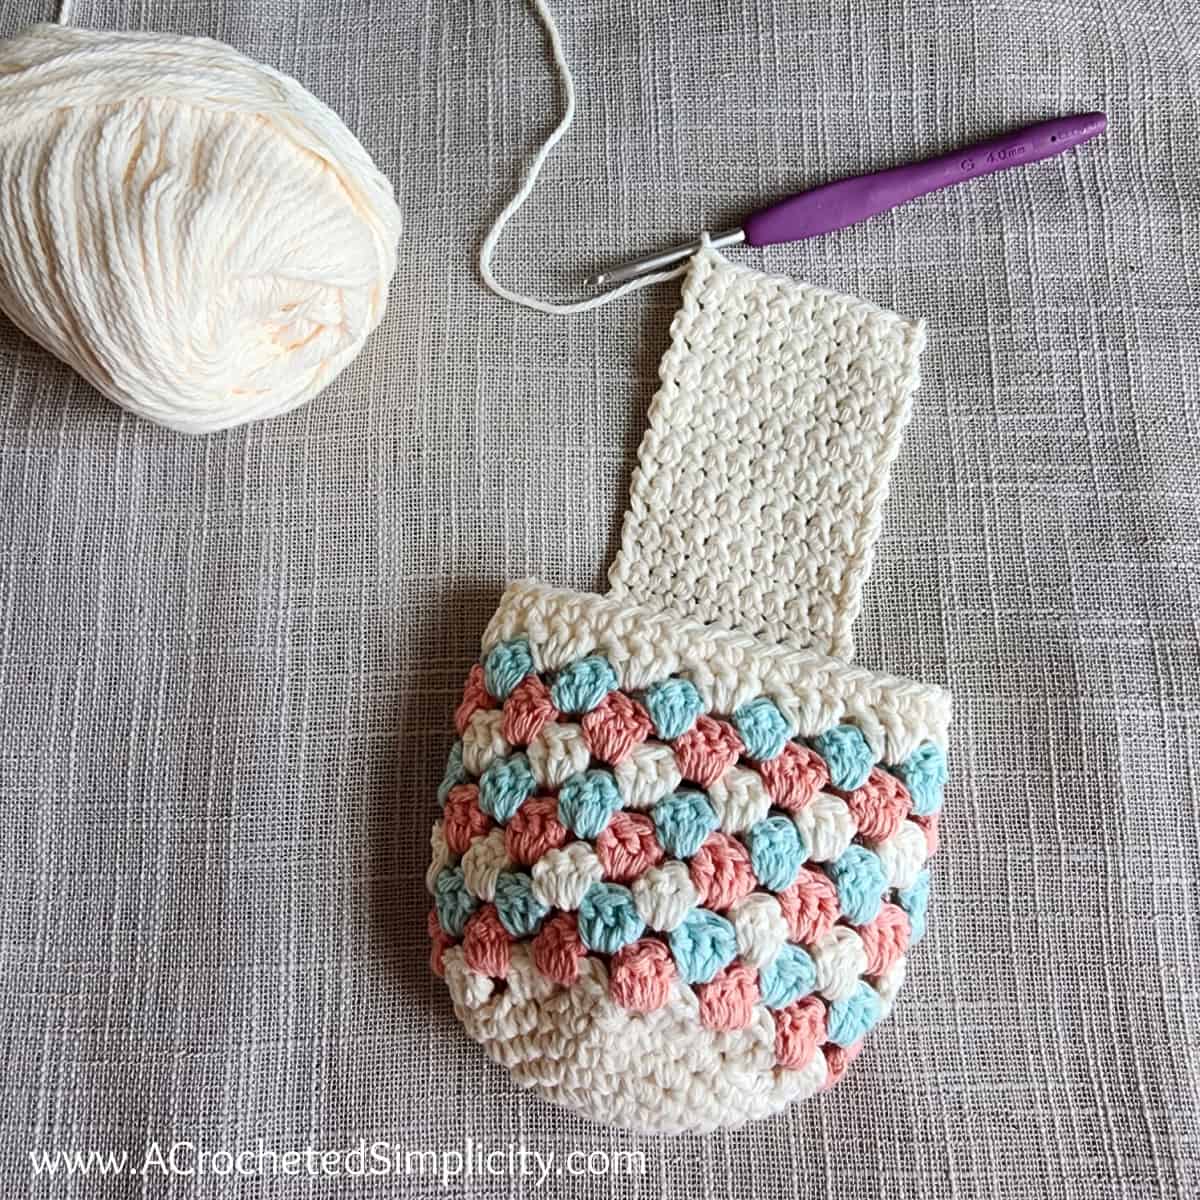 Cream, aqua, and tangerine cotton yarn drink caddy worked in the granny stitch crochet.